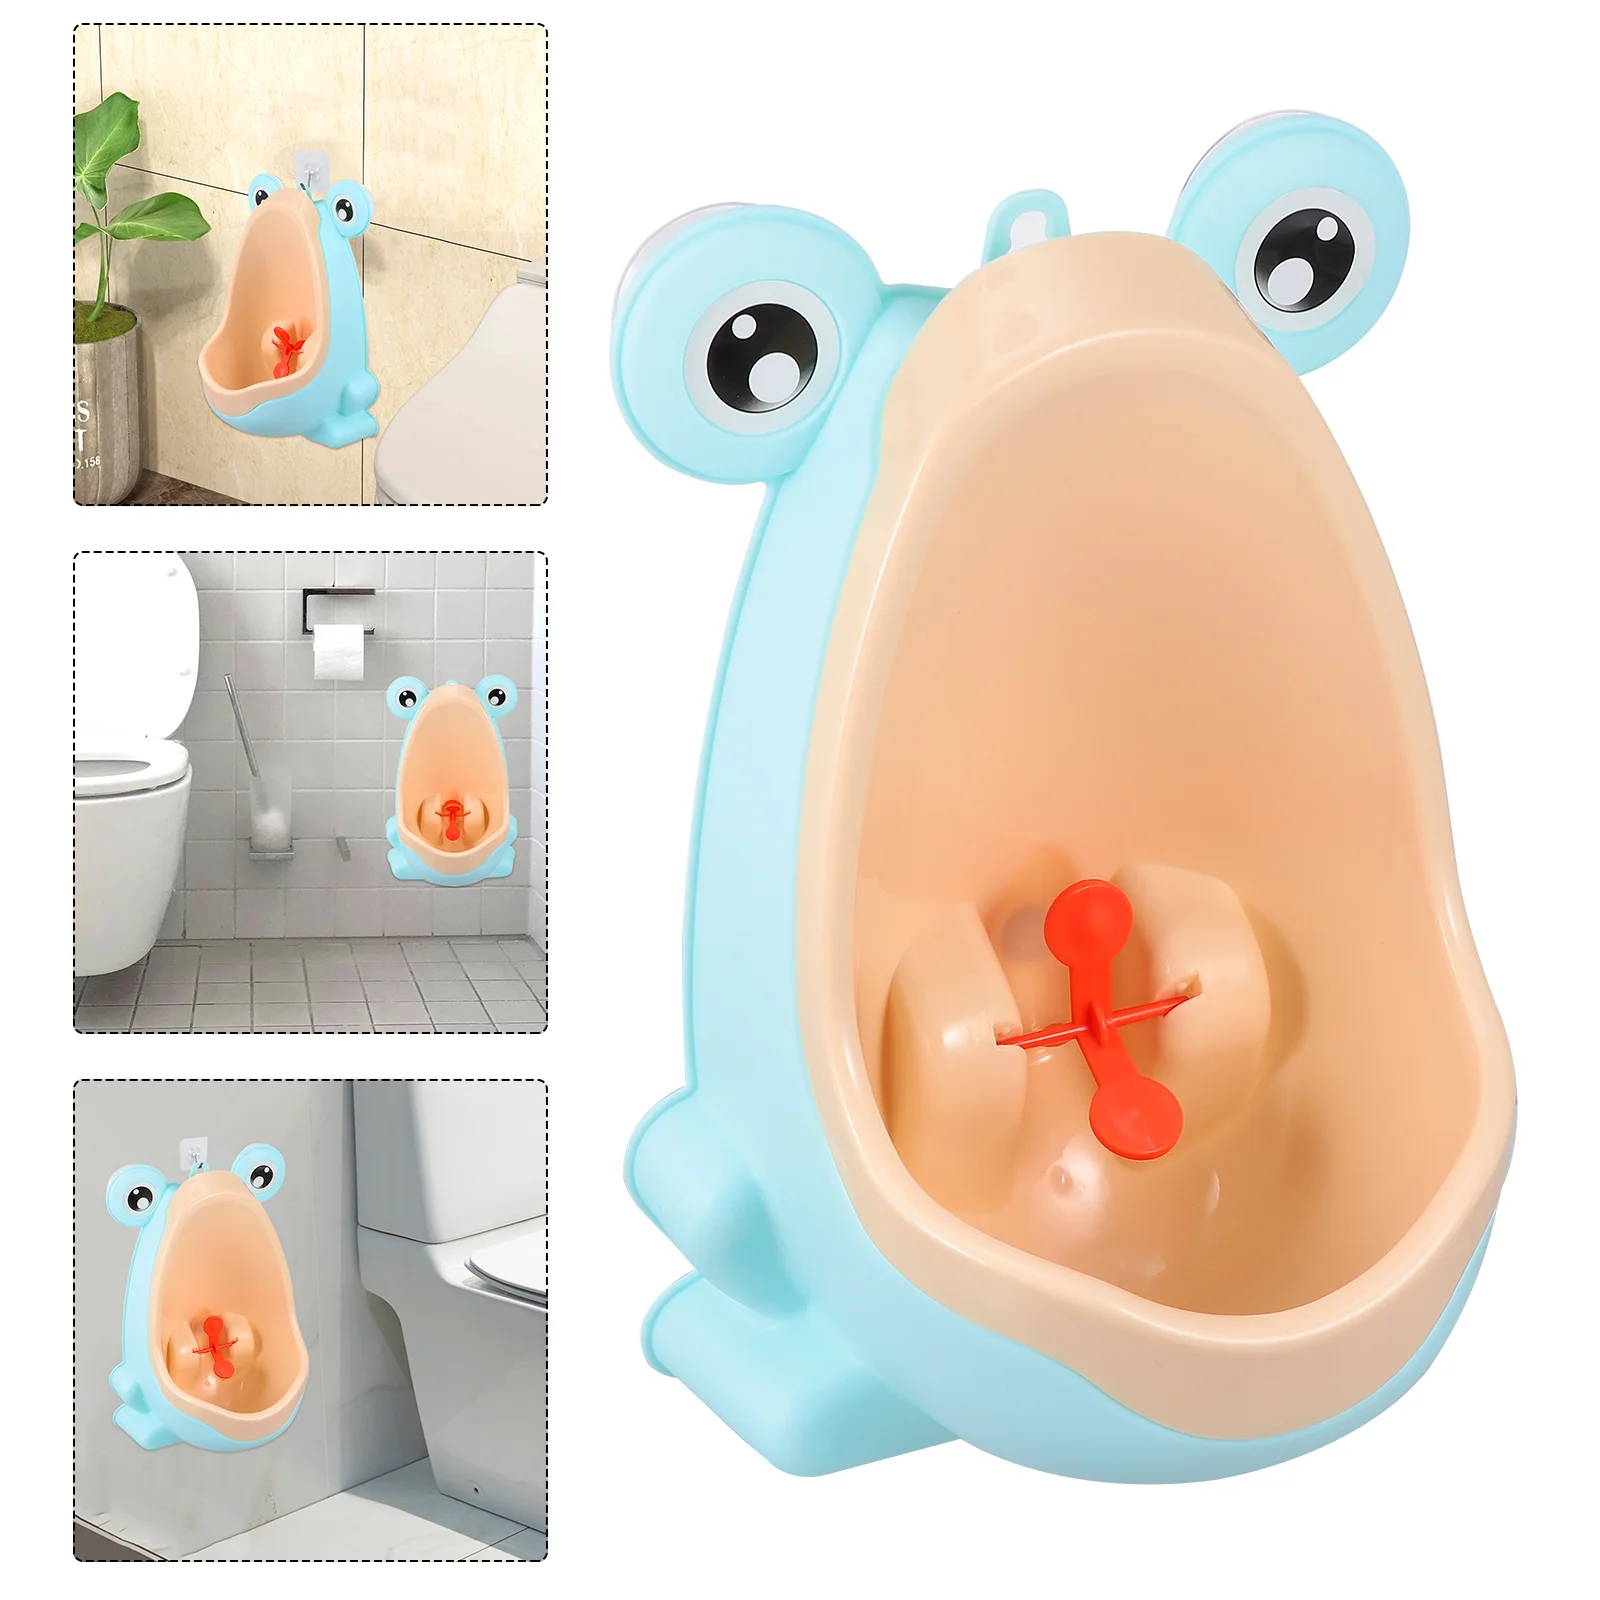 

Potty Training Urinal Children's Animal Toddler Boy Pee Cartoon for Boys Tool Baby